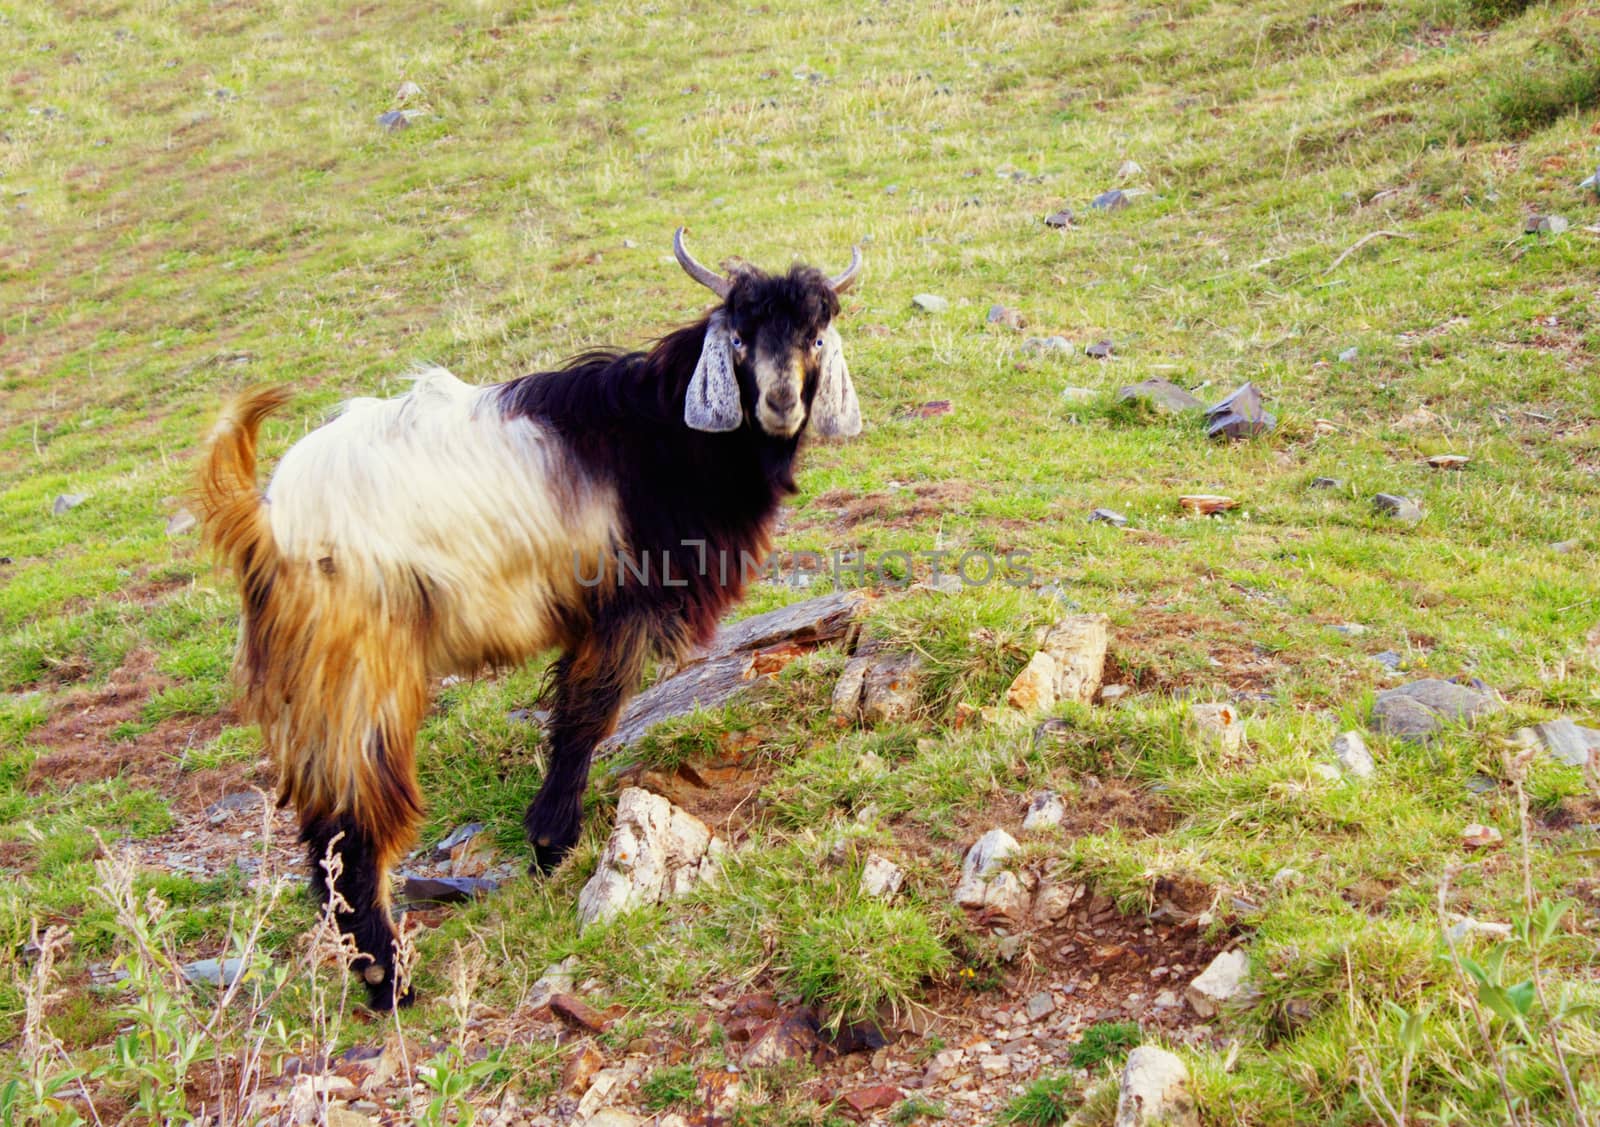 Himalayan Goat by RichieThakur